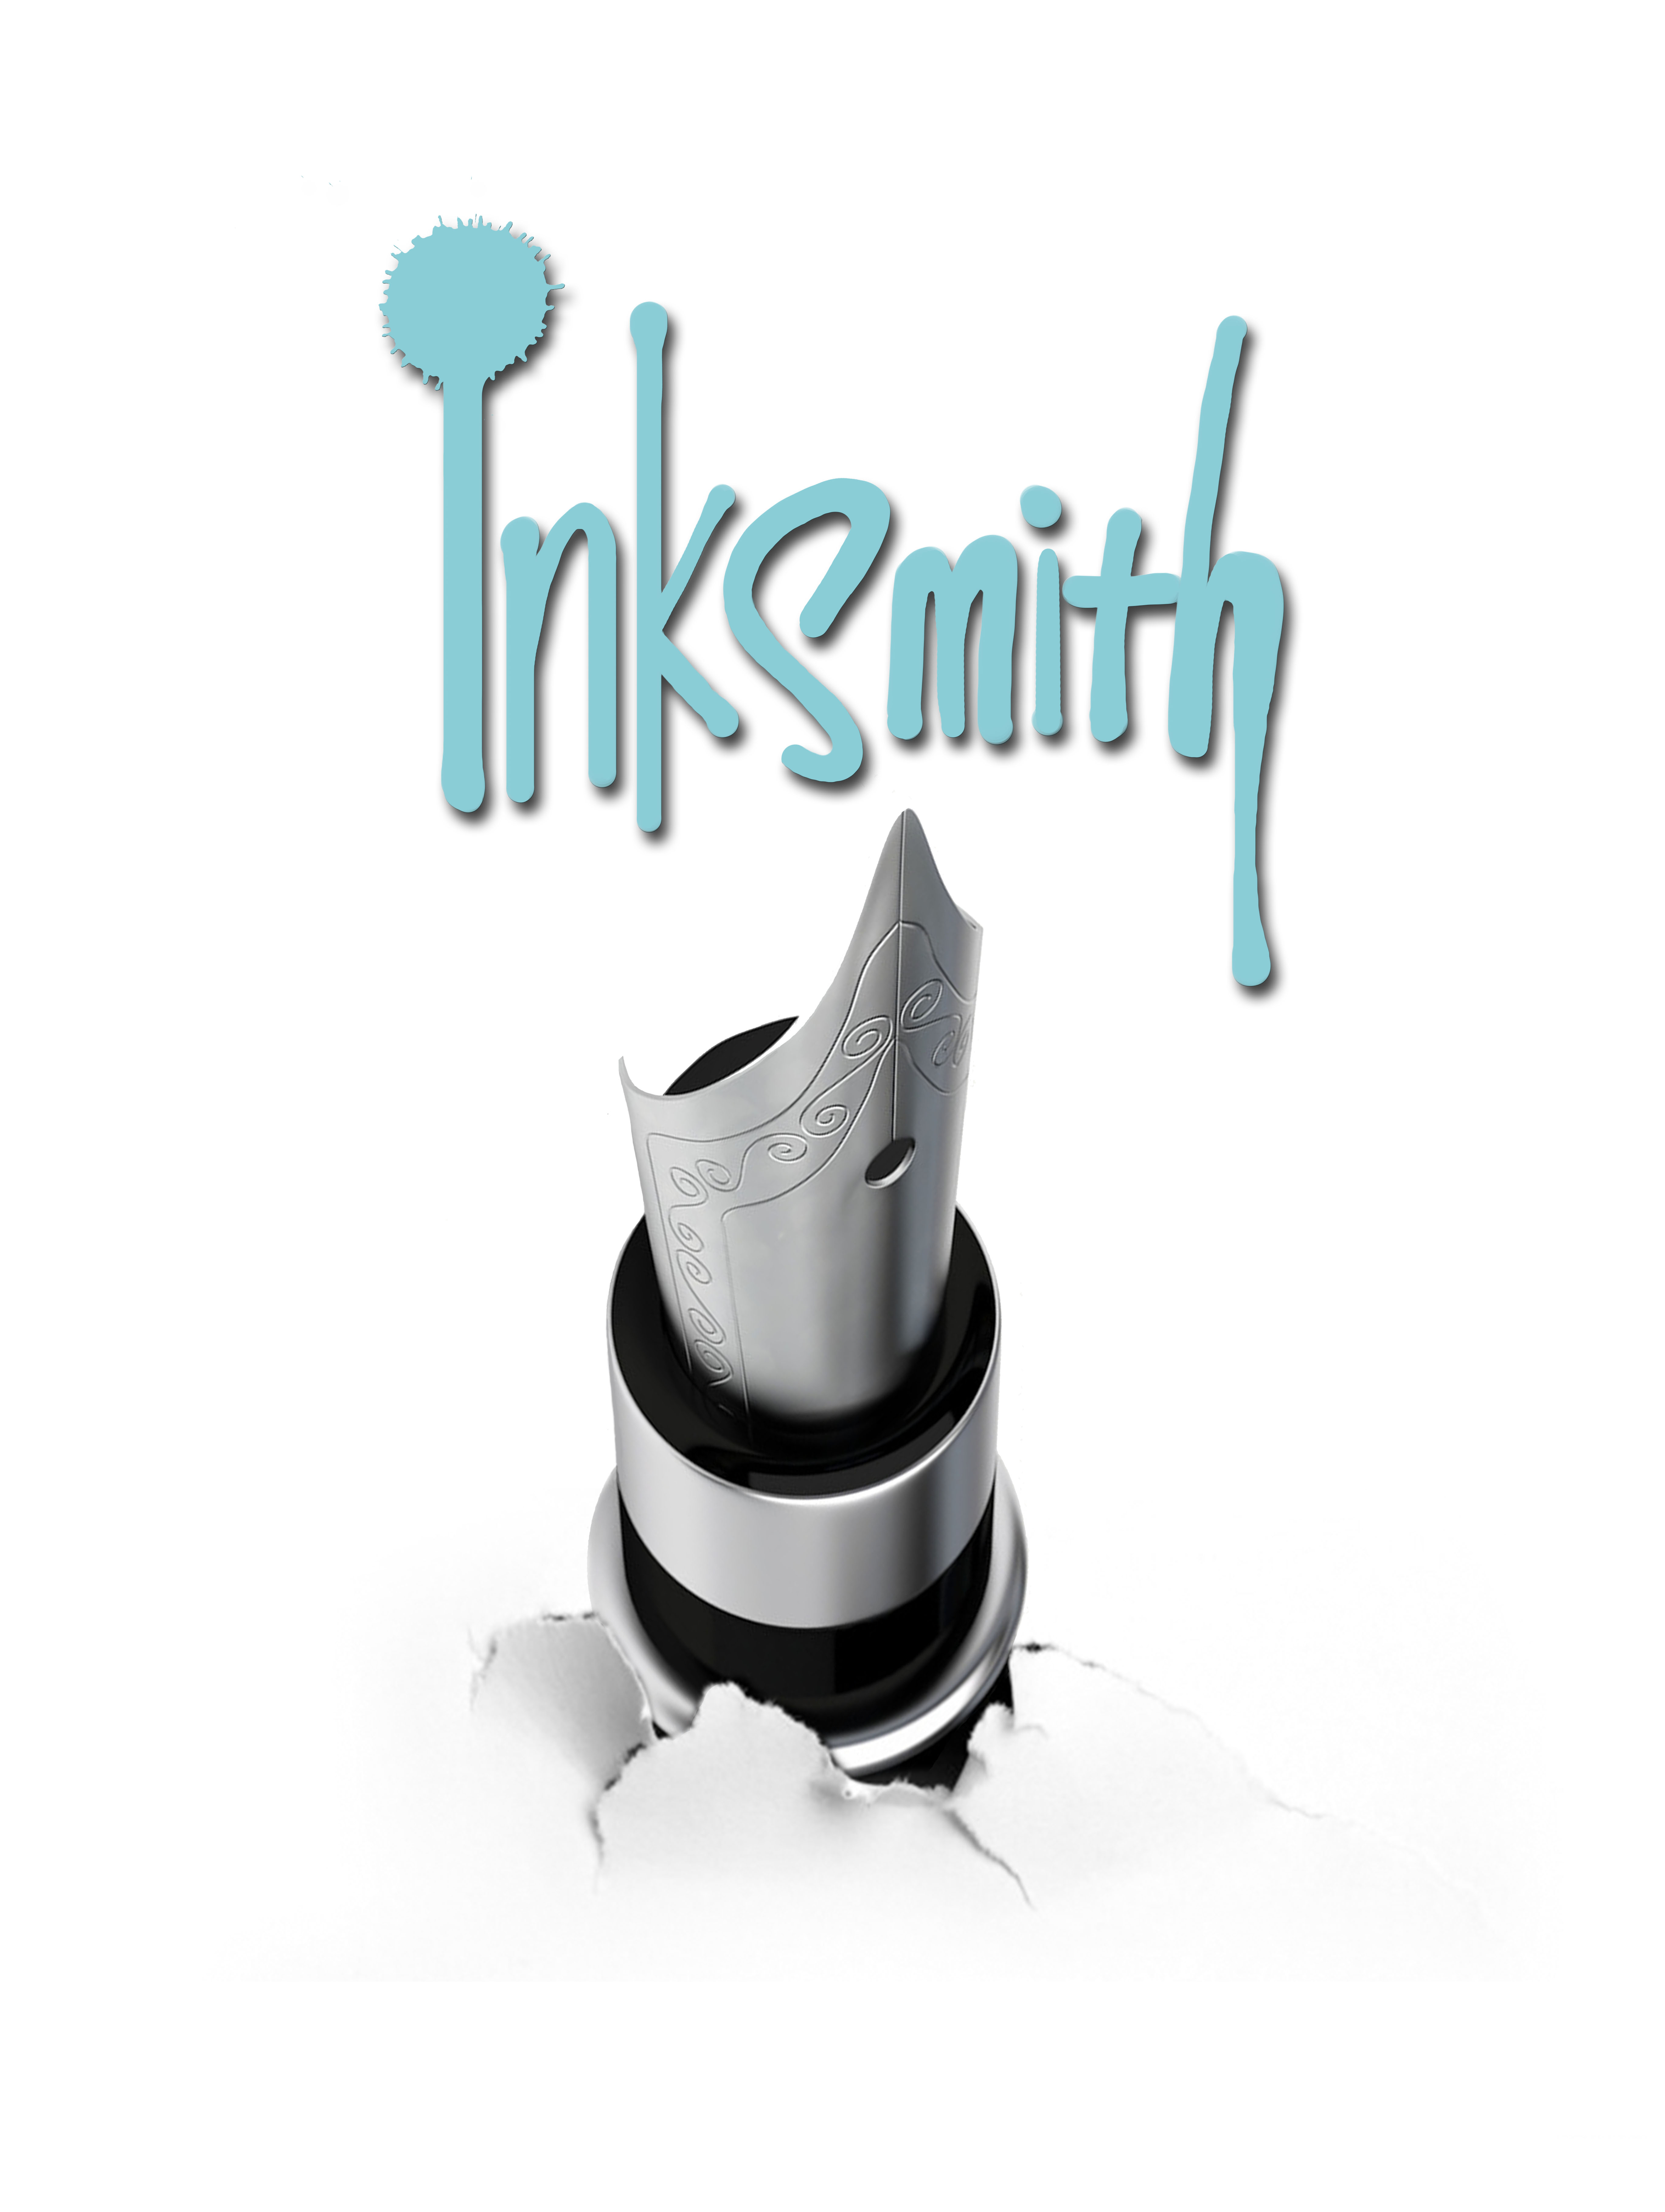 InkSmith_poster_jpg